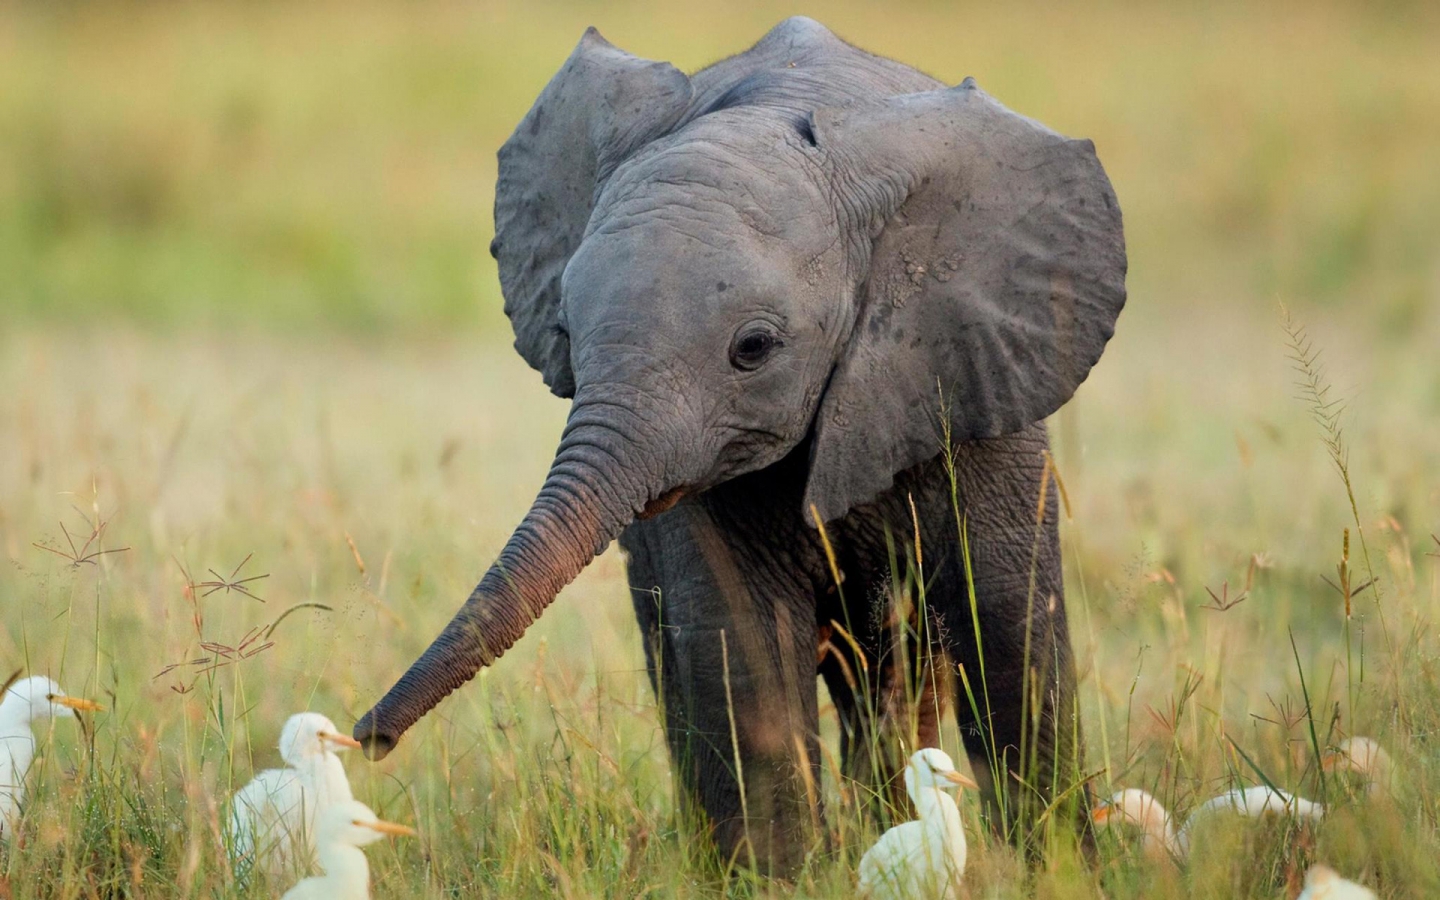 Cute Little Elephant for 1440 x 900 widescreen resolution